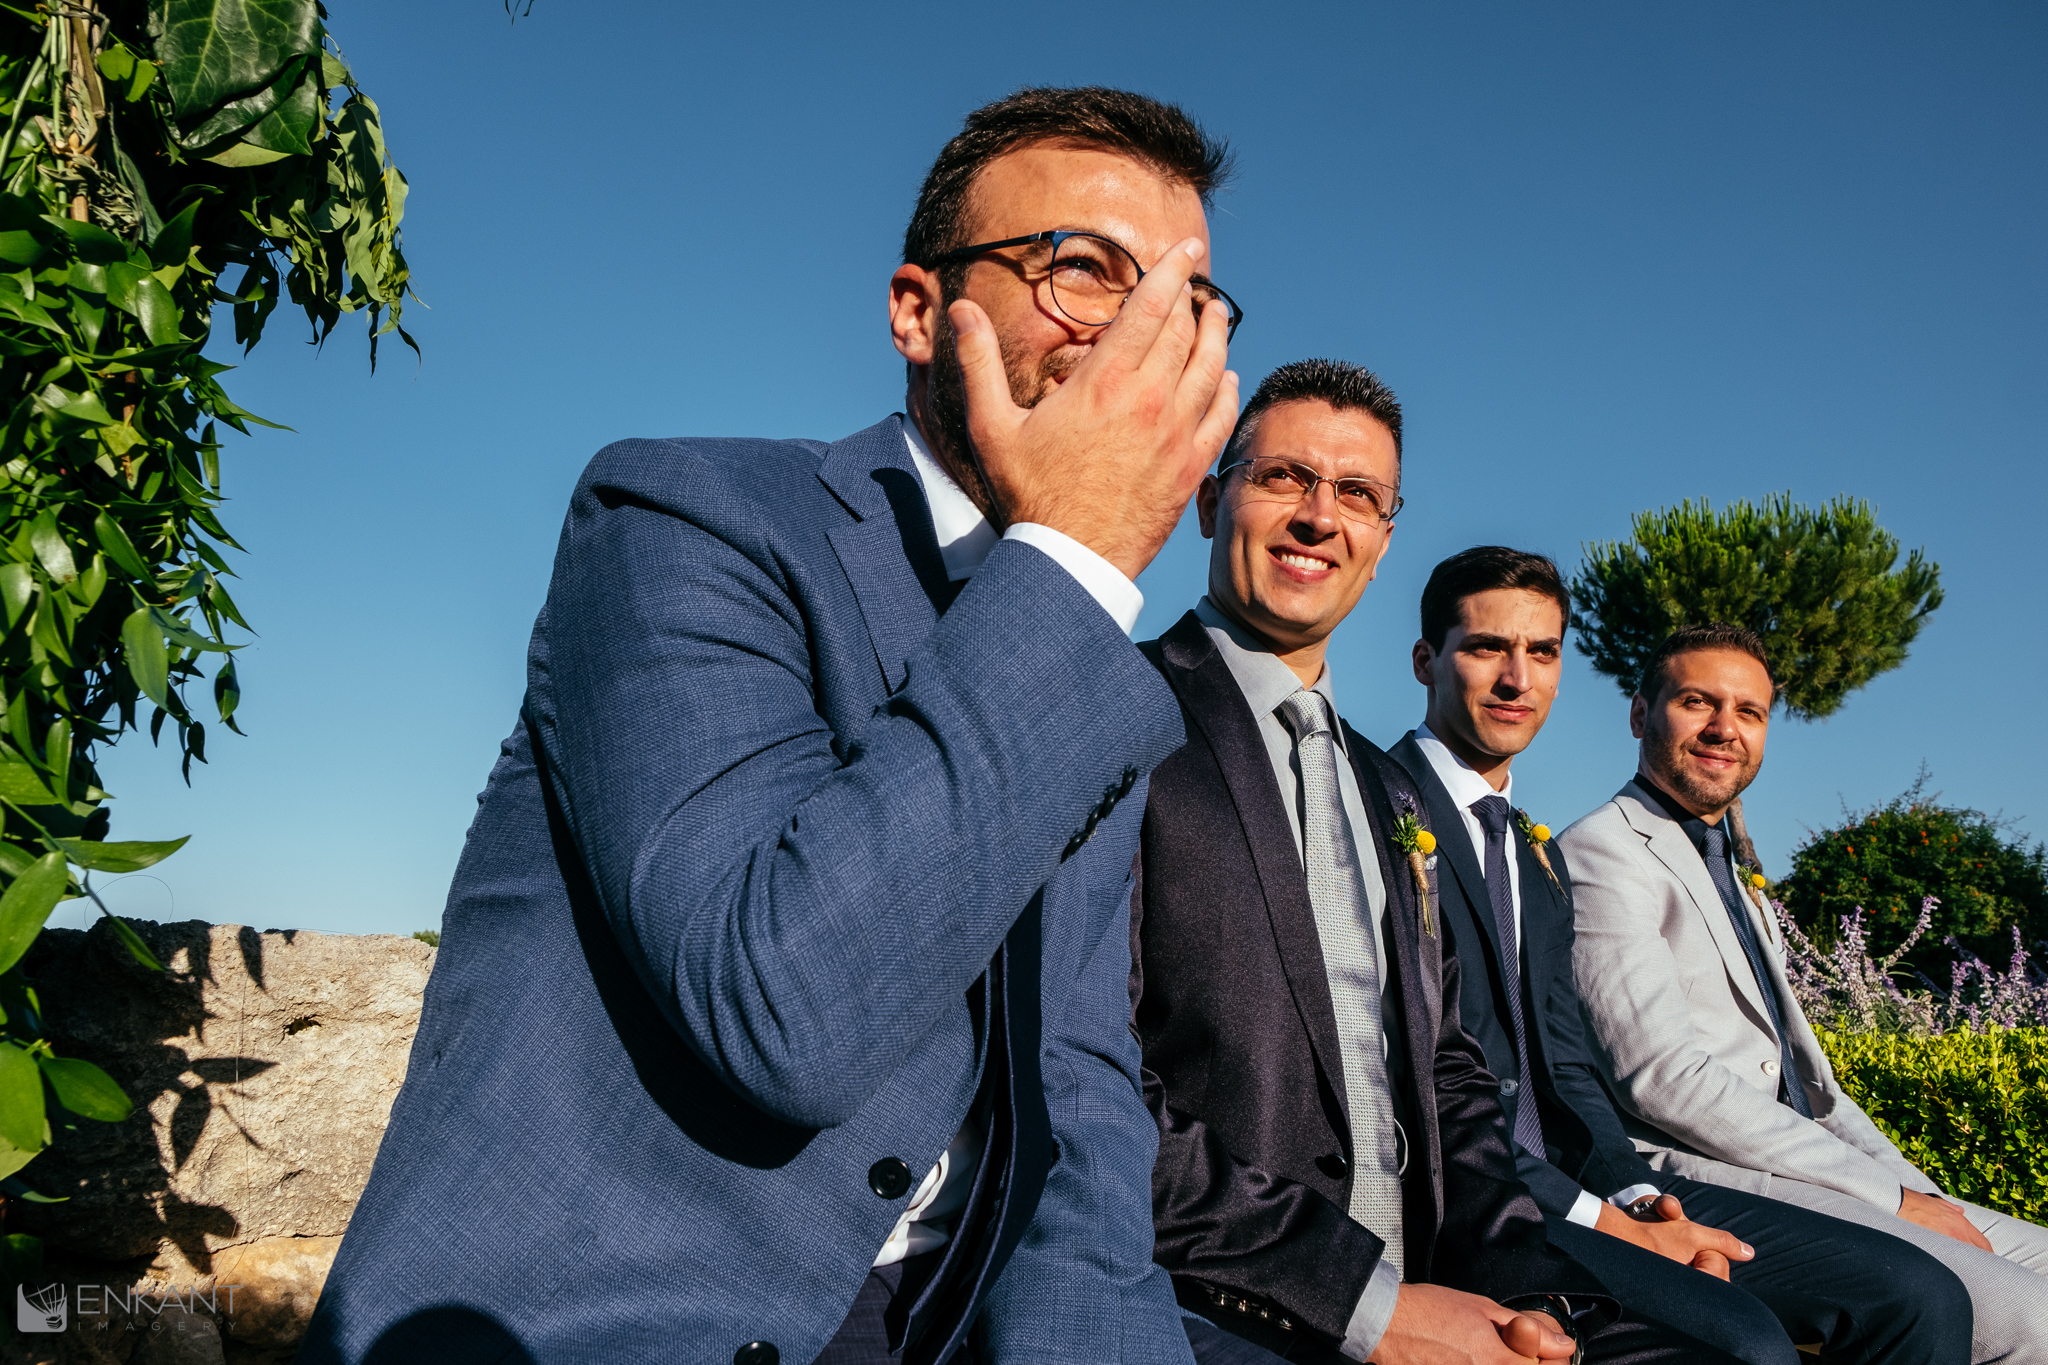 Wedding photographer- Sicily-29.jpg